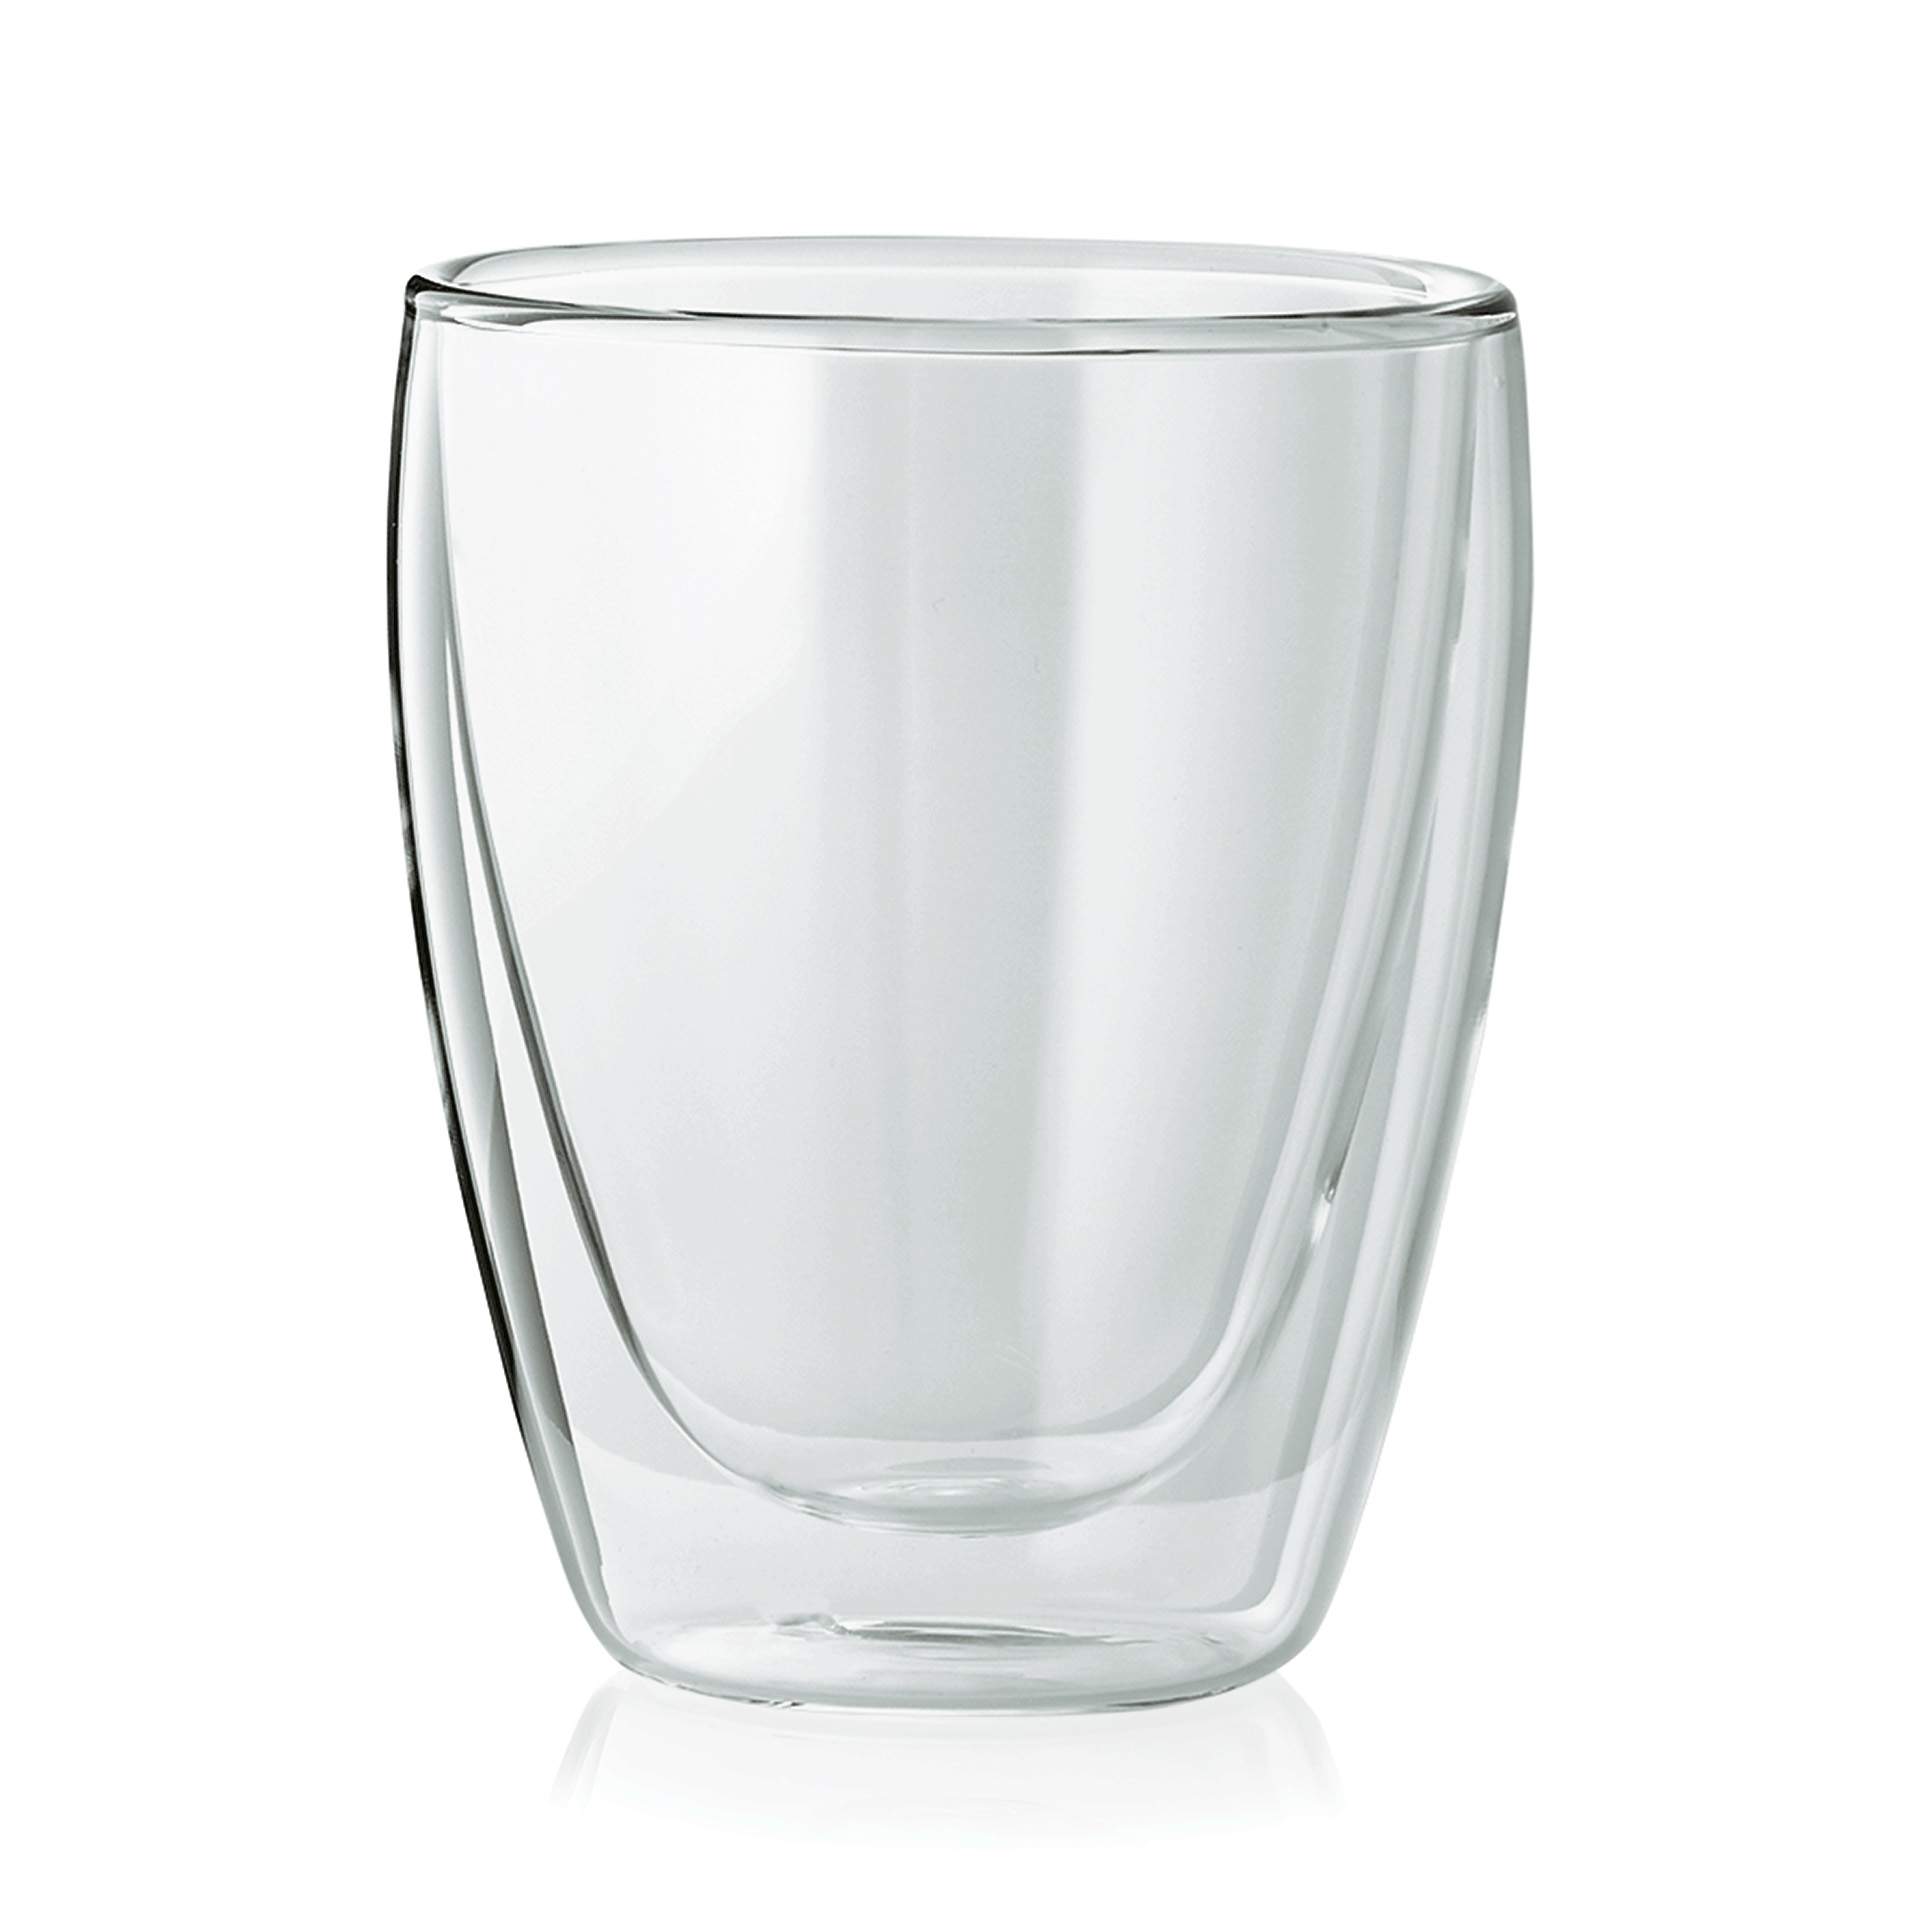 Cappuccino-Glas - Borosilikatglas - Serie Lounge - Abm. 10,0 cm - Ø oben / unten 8,2 / 5,4 cm - Inhalt 0,23 l - Glas - 1773023-A